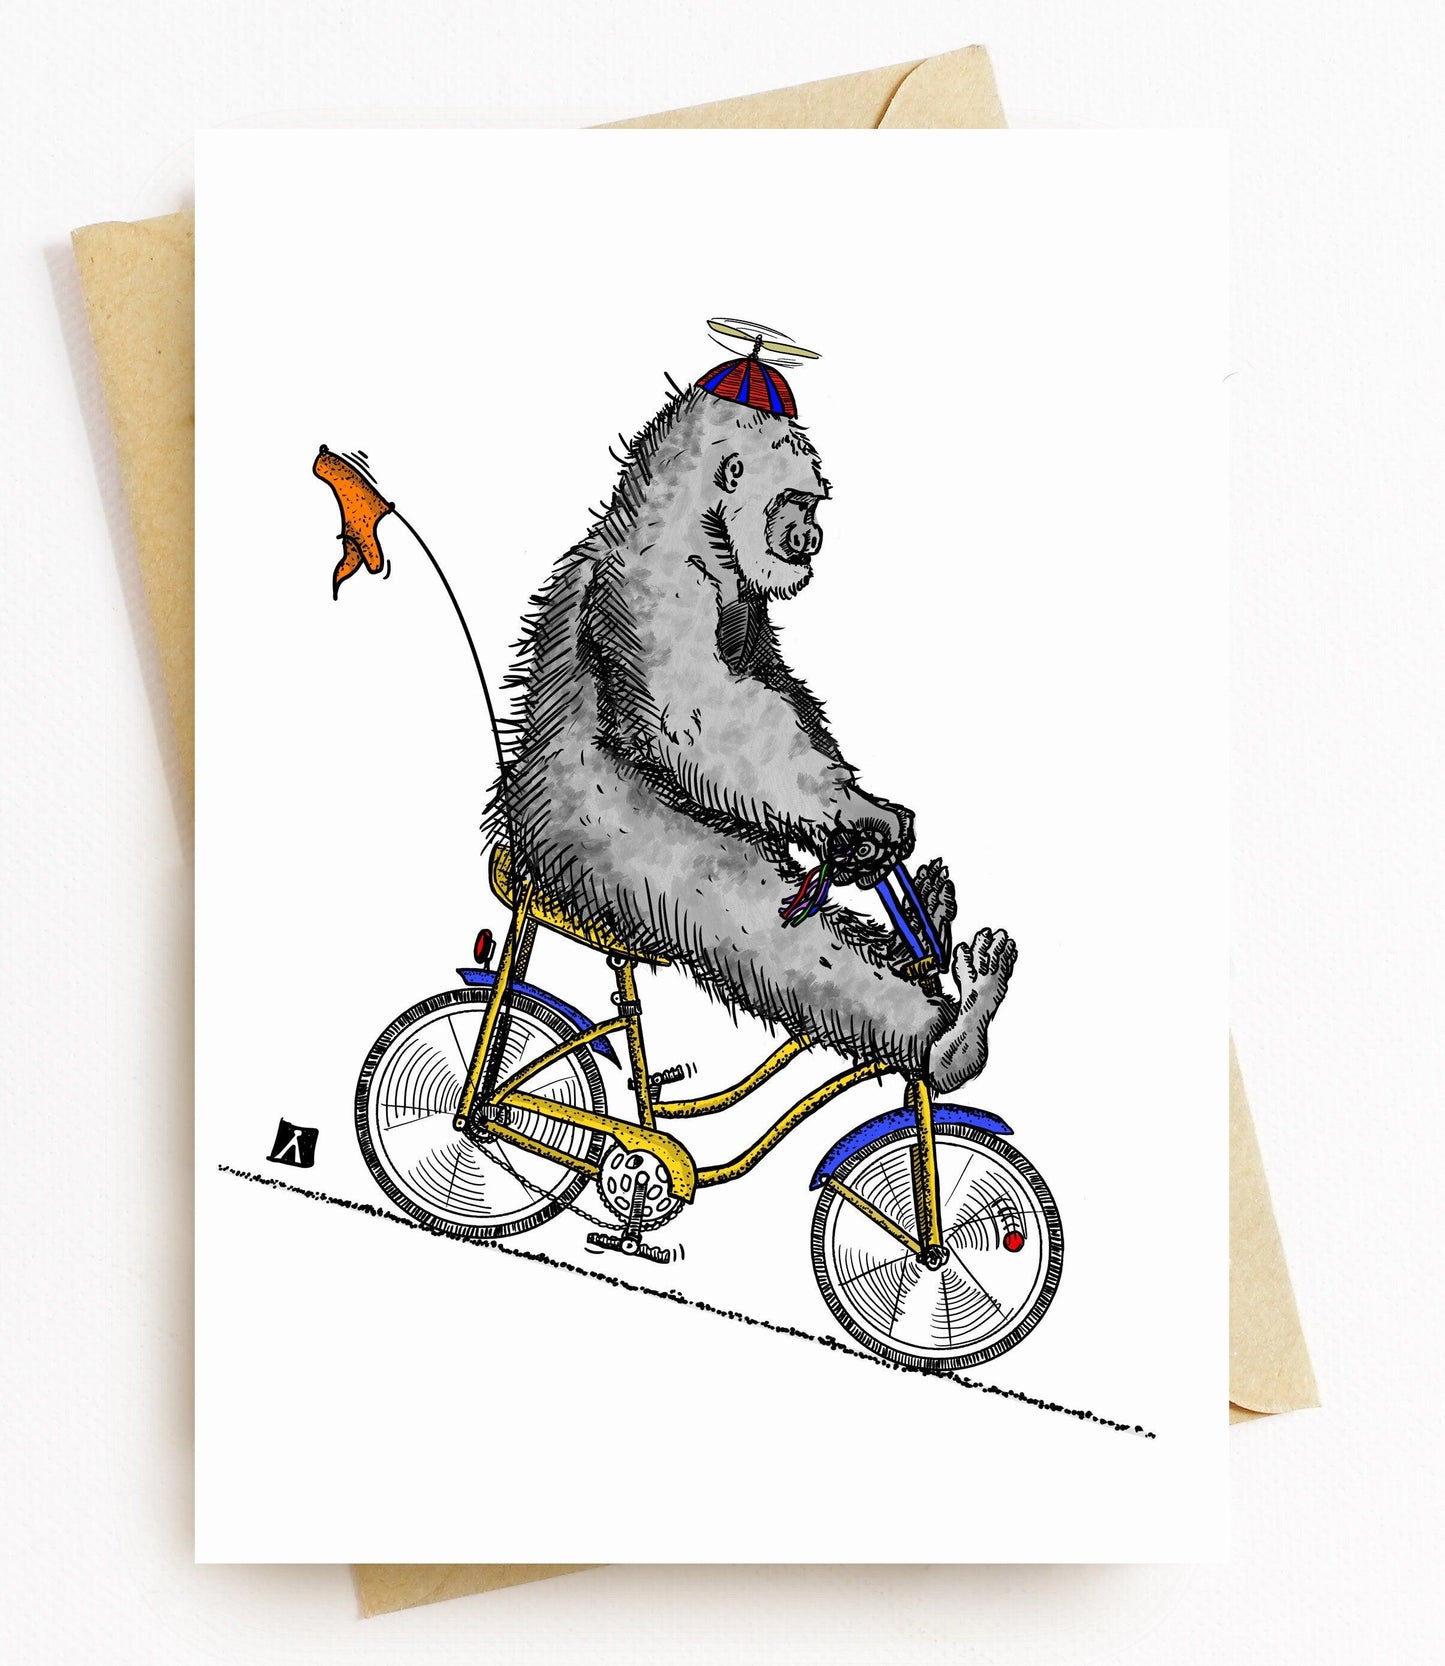 BellavanceInk: Greeting Card With A Gorilla Riding Down A Hill On Their Banana Seat Bike  5 x 7 Inches - BellavanceInk